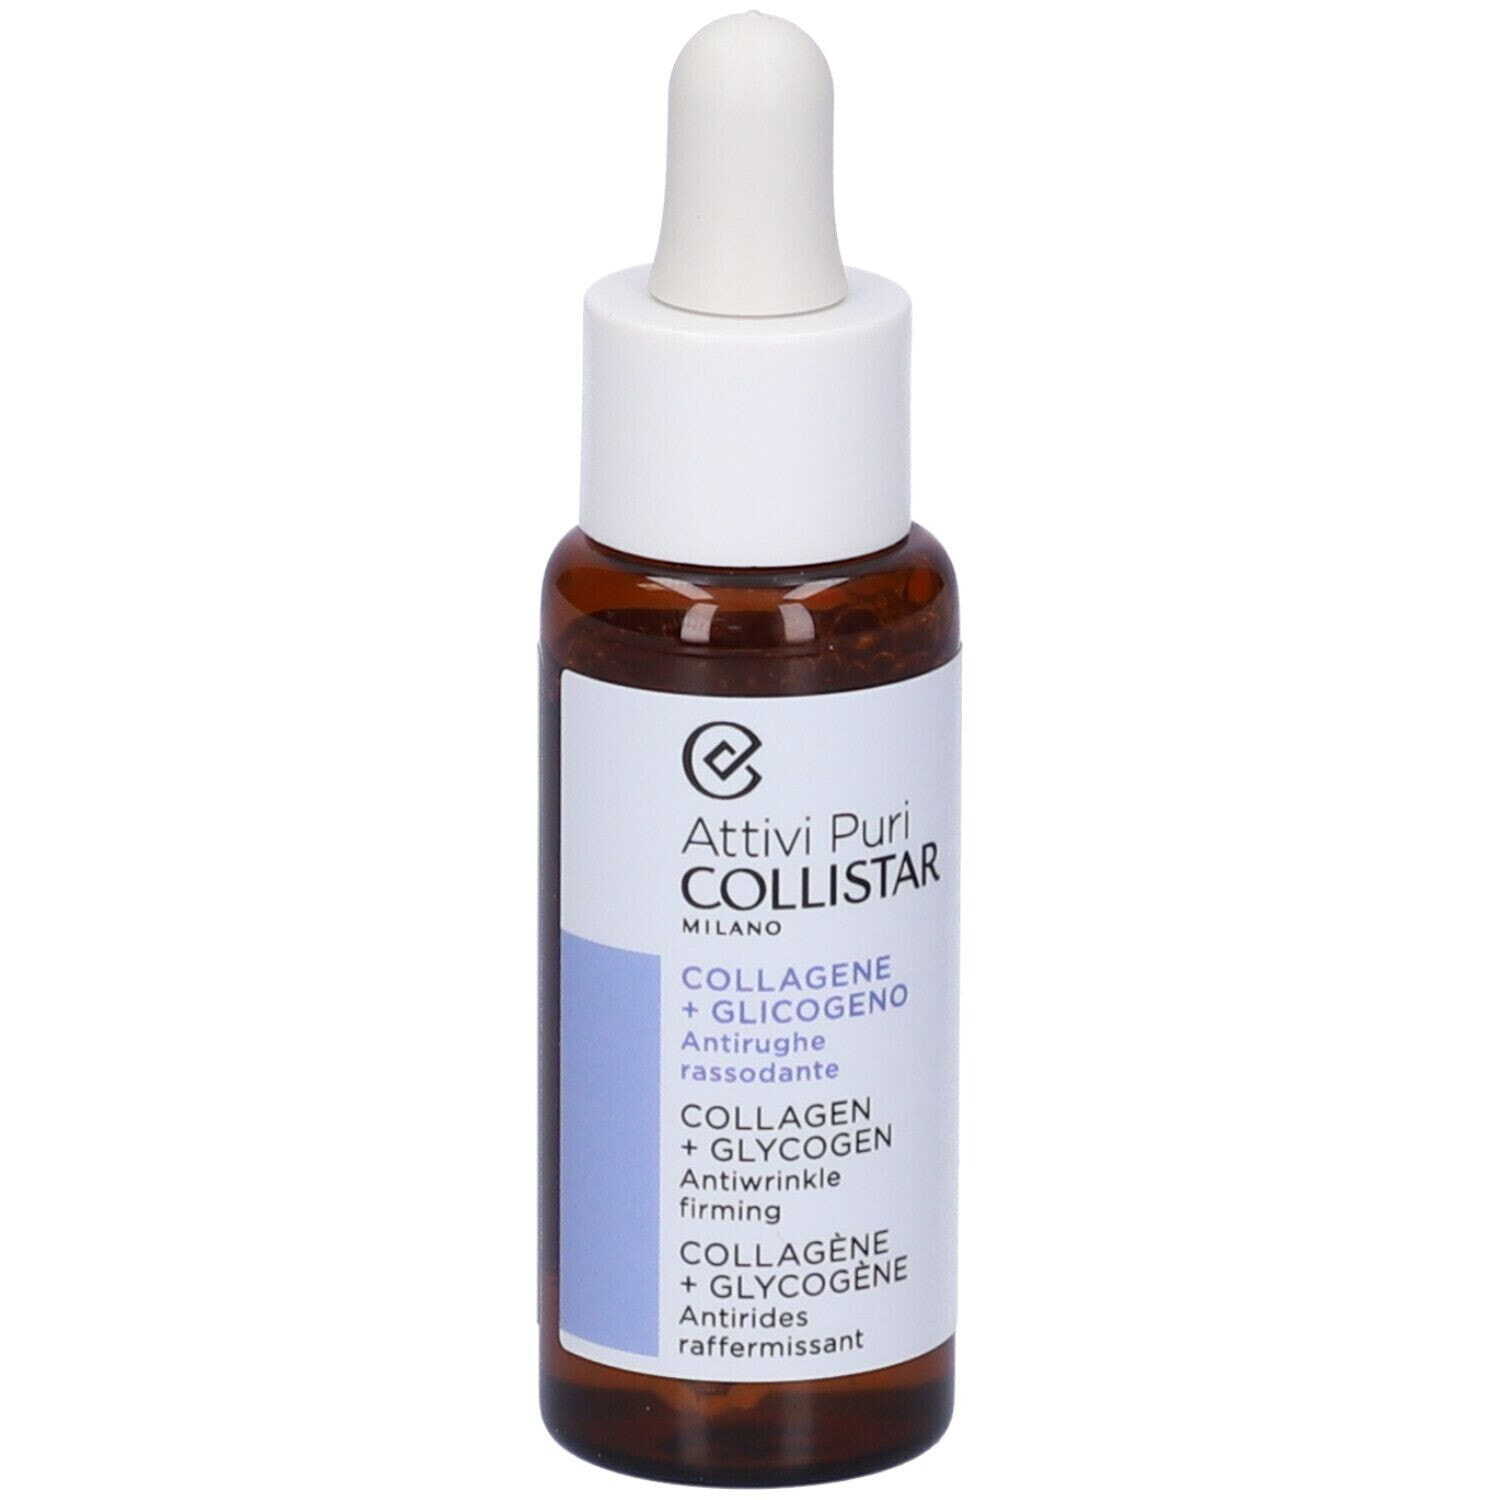 Firming serum for mature skin ( Collagen + Glycogen) 30 ml